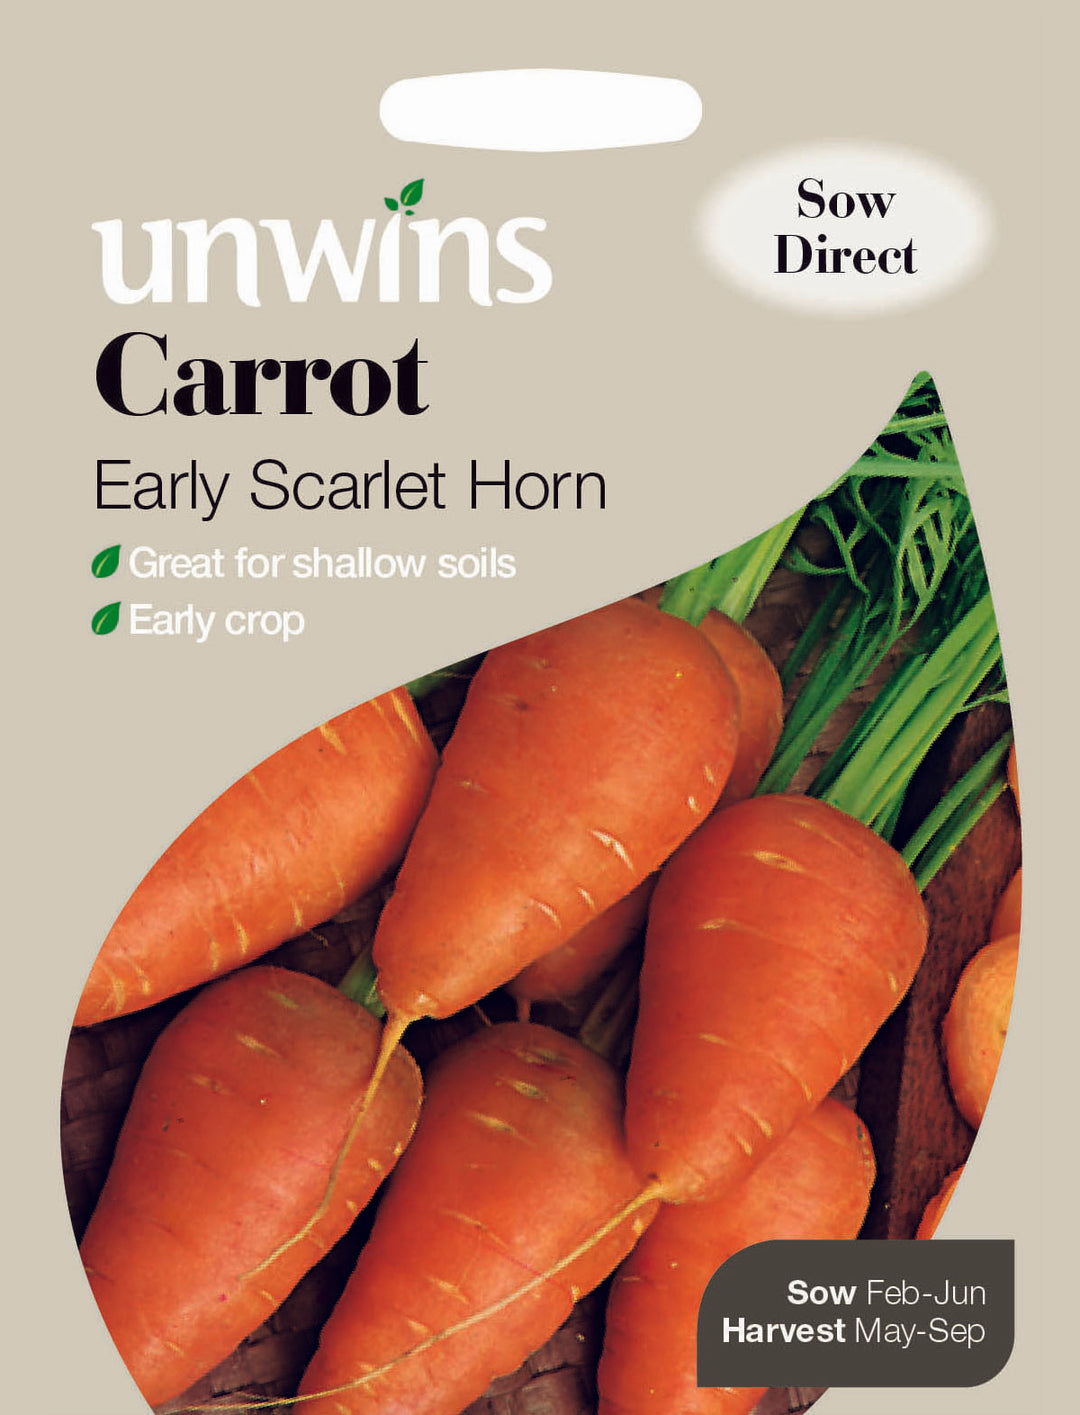 Carrot Early Scarlet Horn